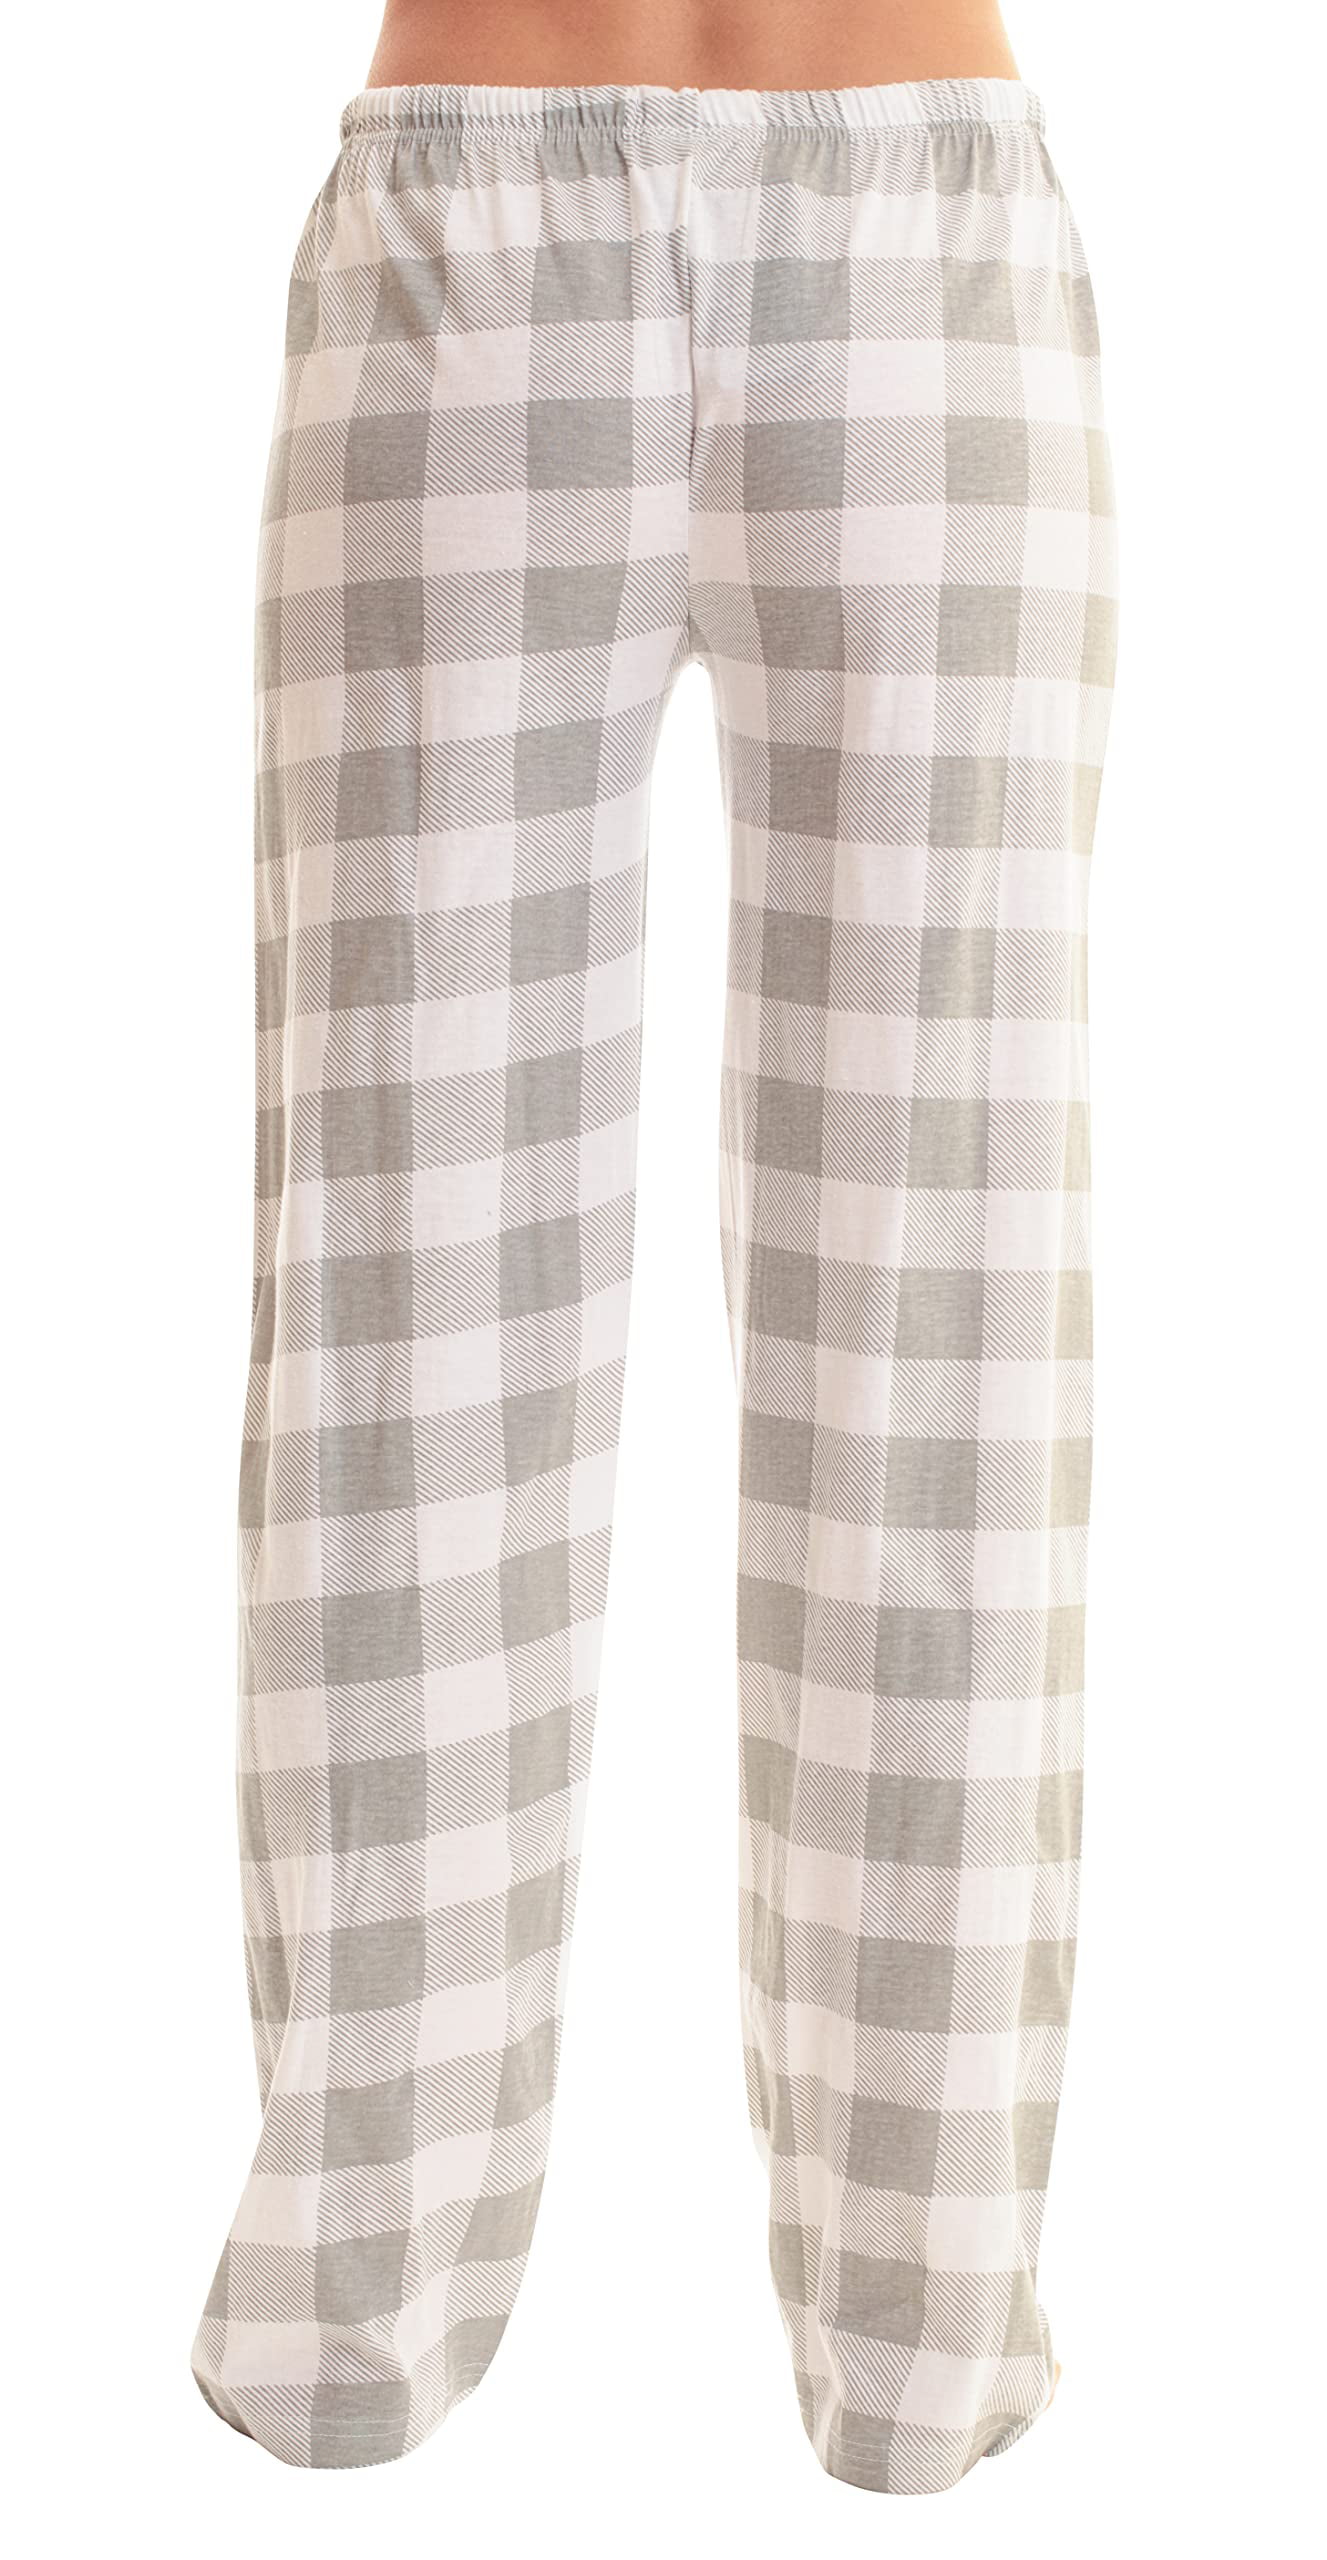 Twill pyjama bottoms - Light blue/Striped - Ladies | H&M IN